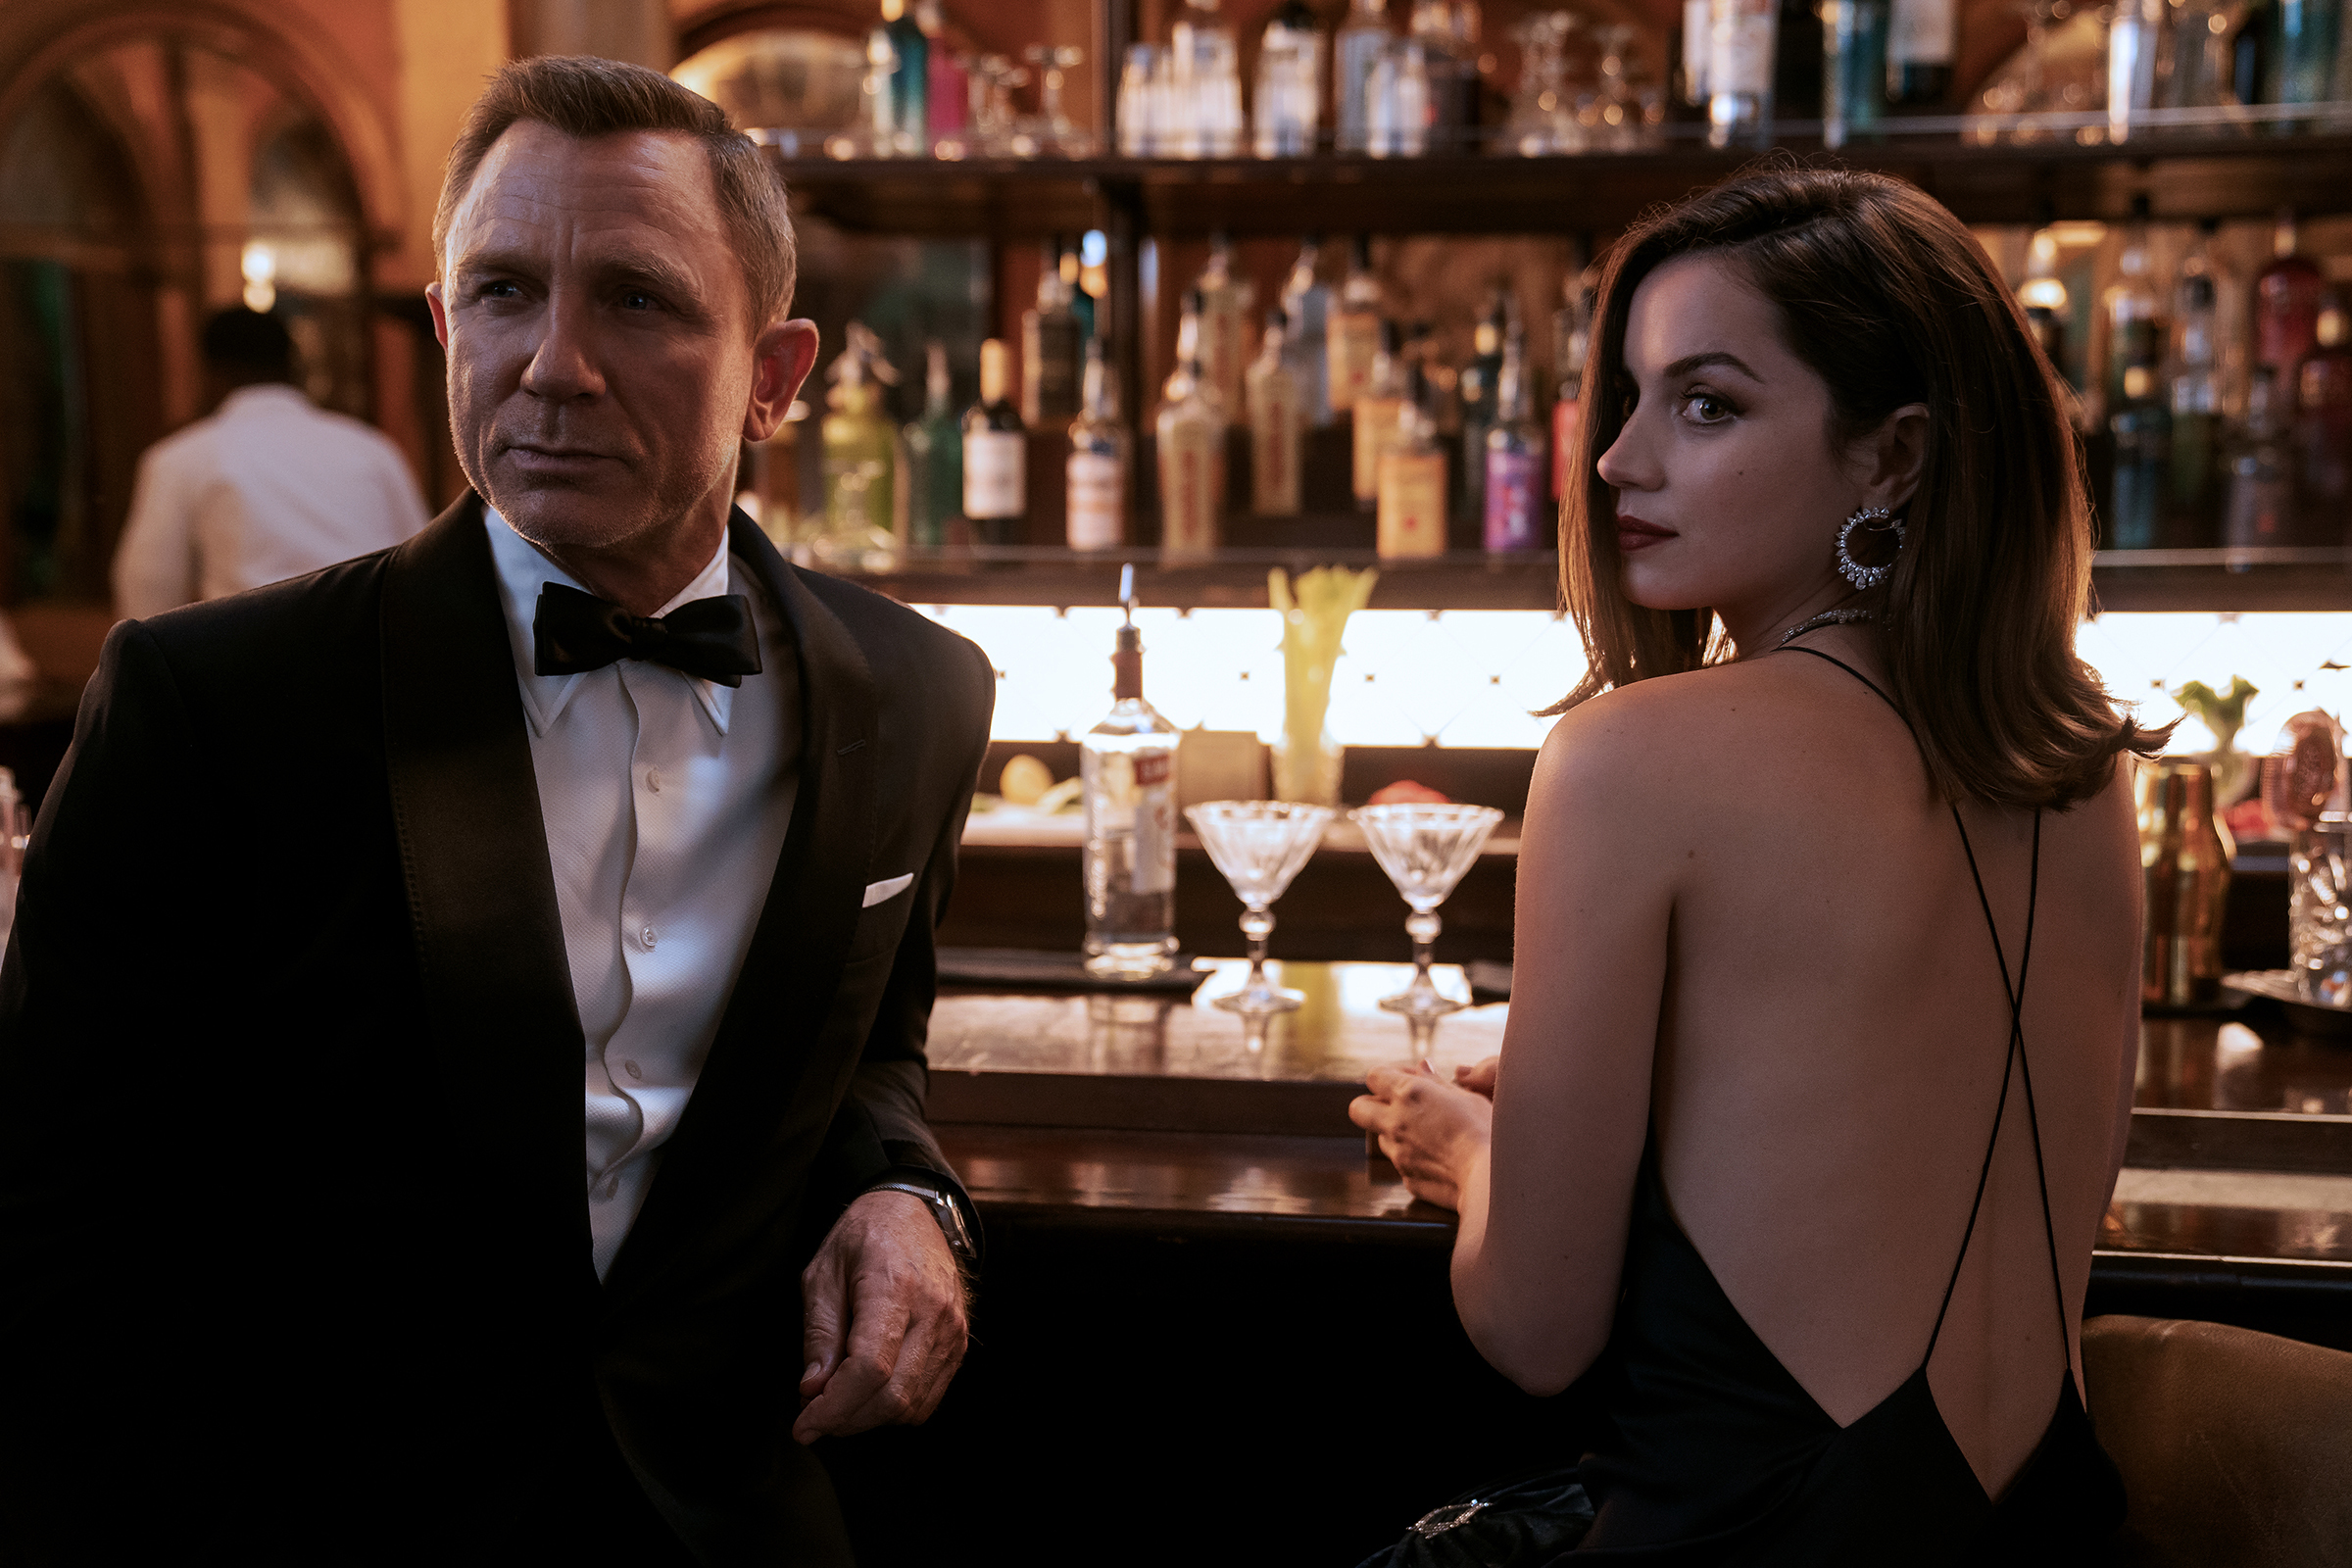 Pierce Brosnan Is the James Bond We Need Now - InsideHook